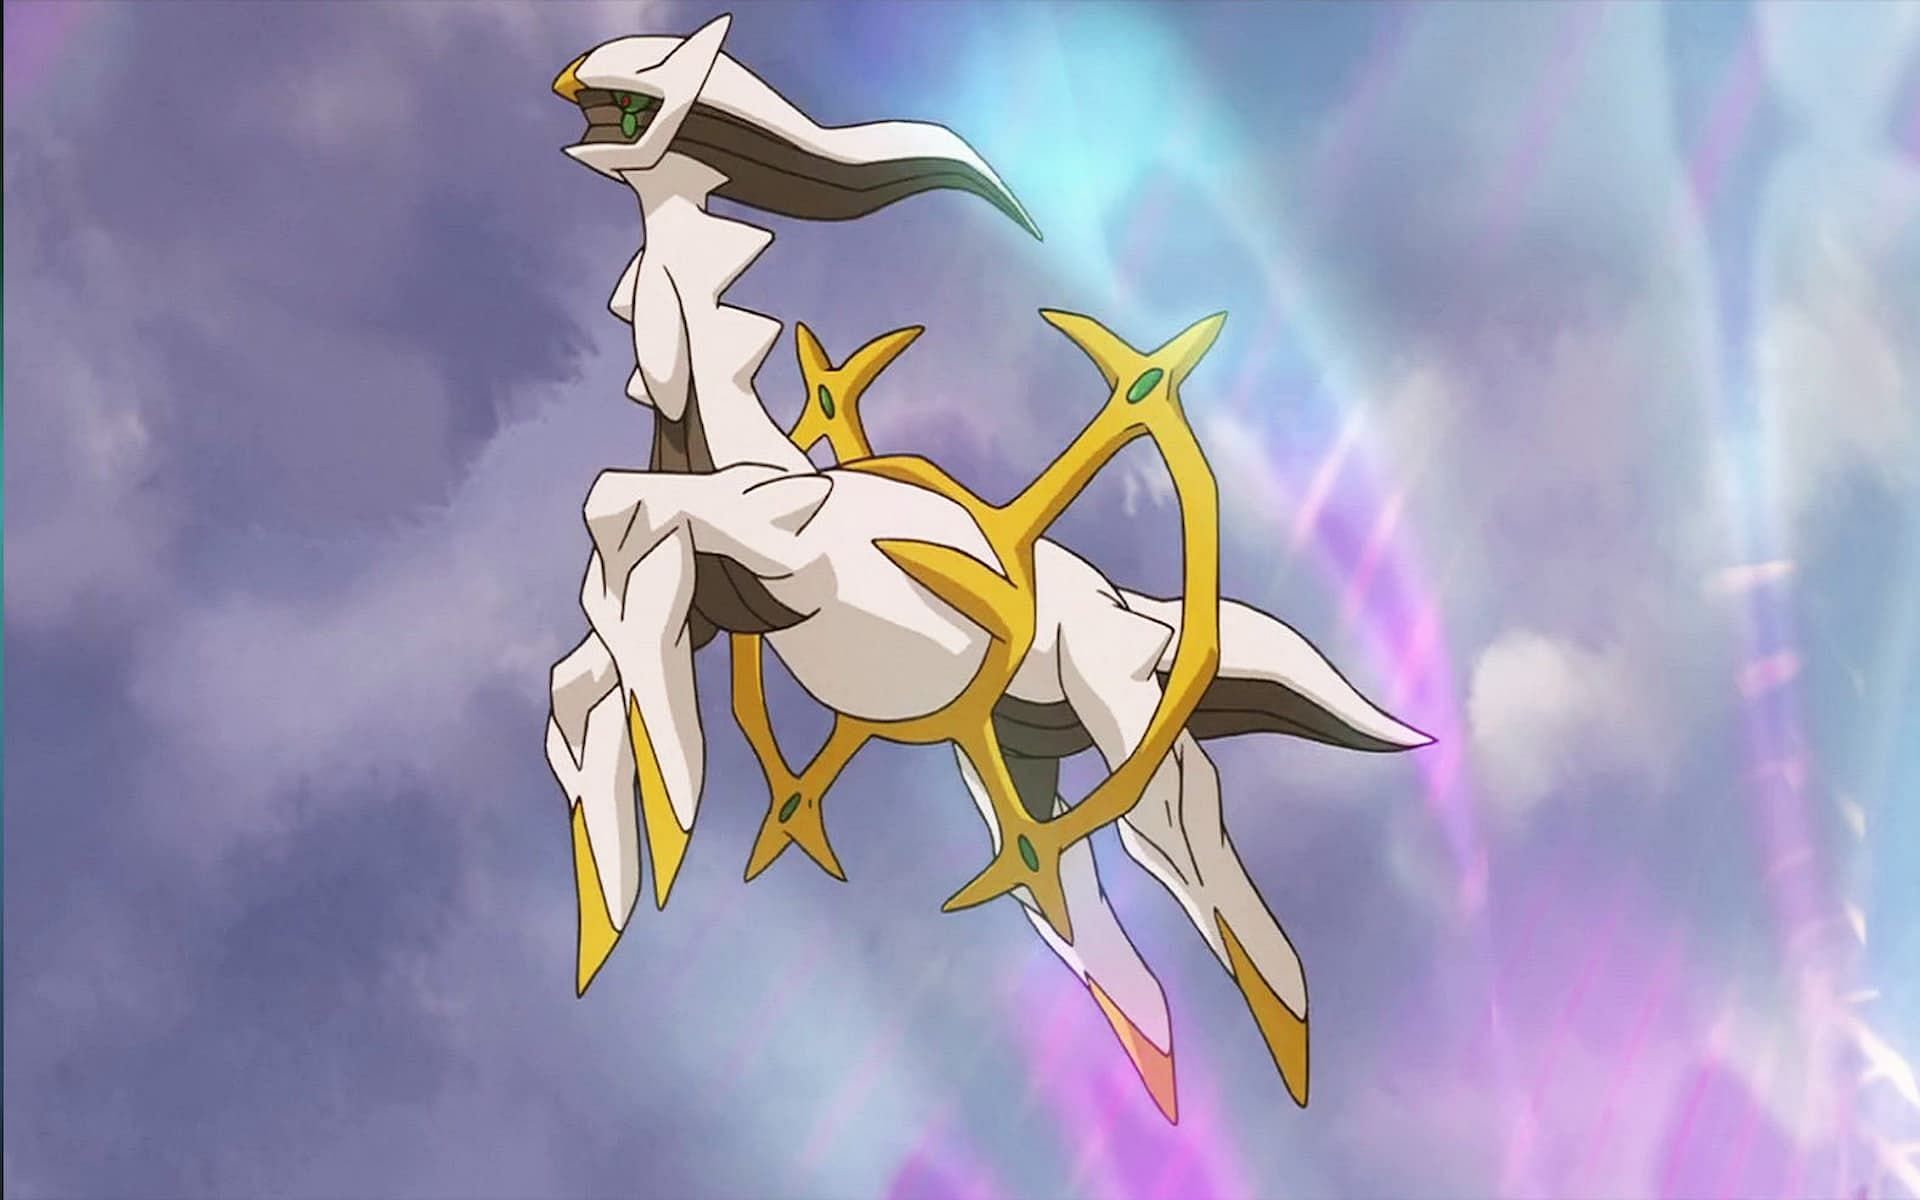 Arceus in the anime. (Image via The Pokemon Company)